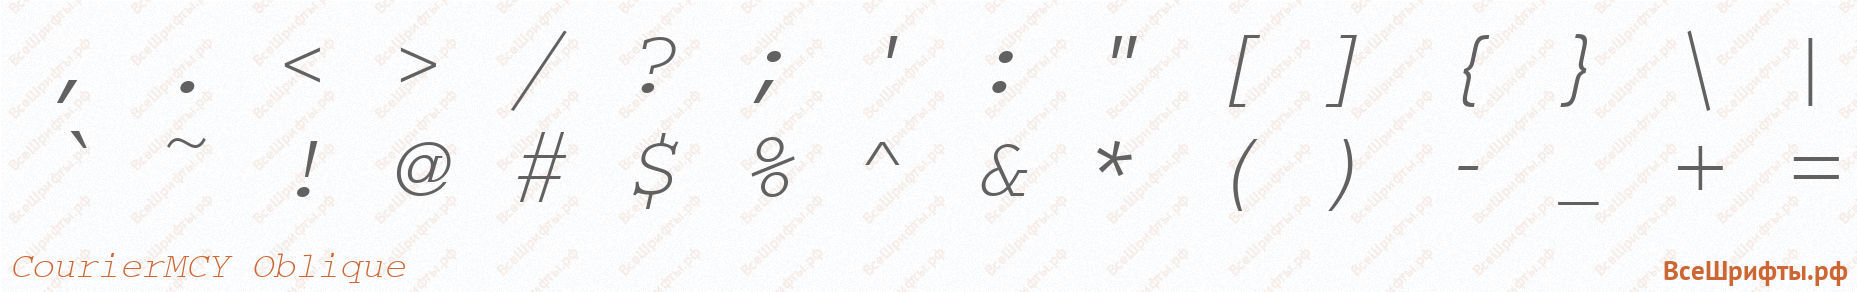 Шрифт CourierMCY Oblique со знаками препинания и пунктуации